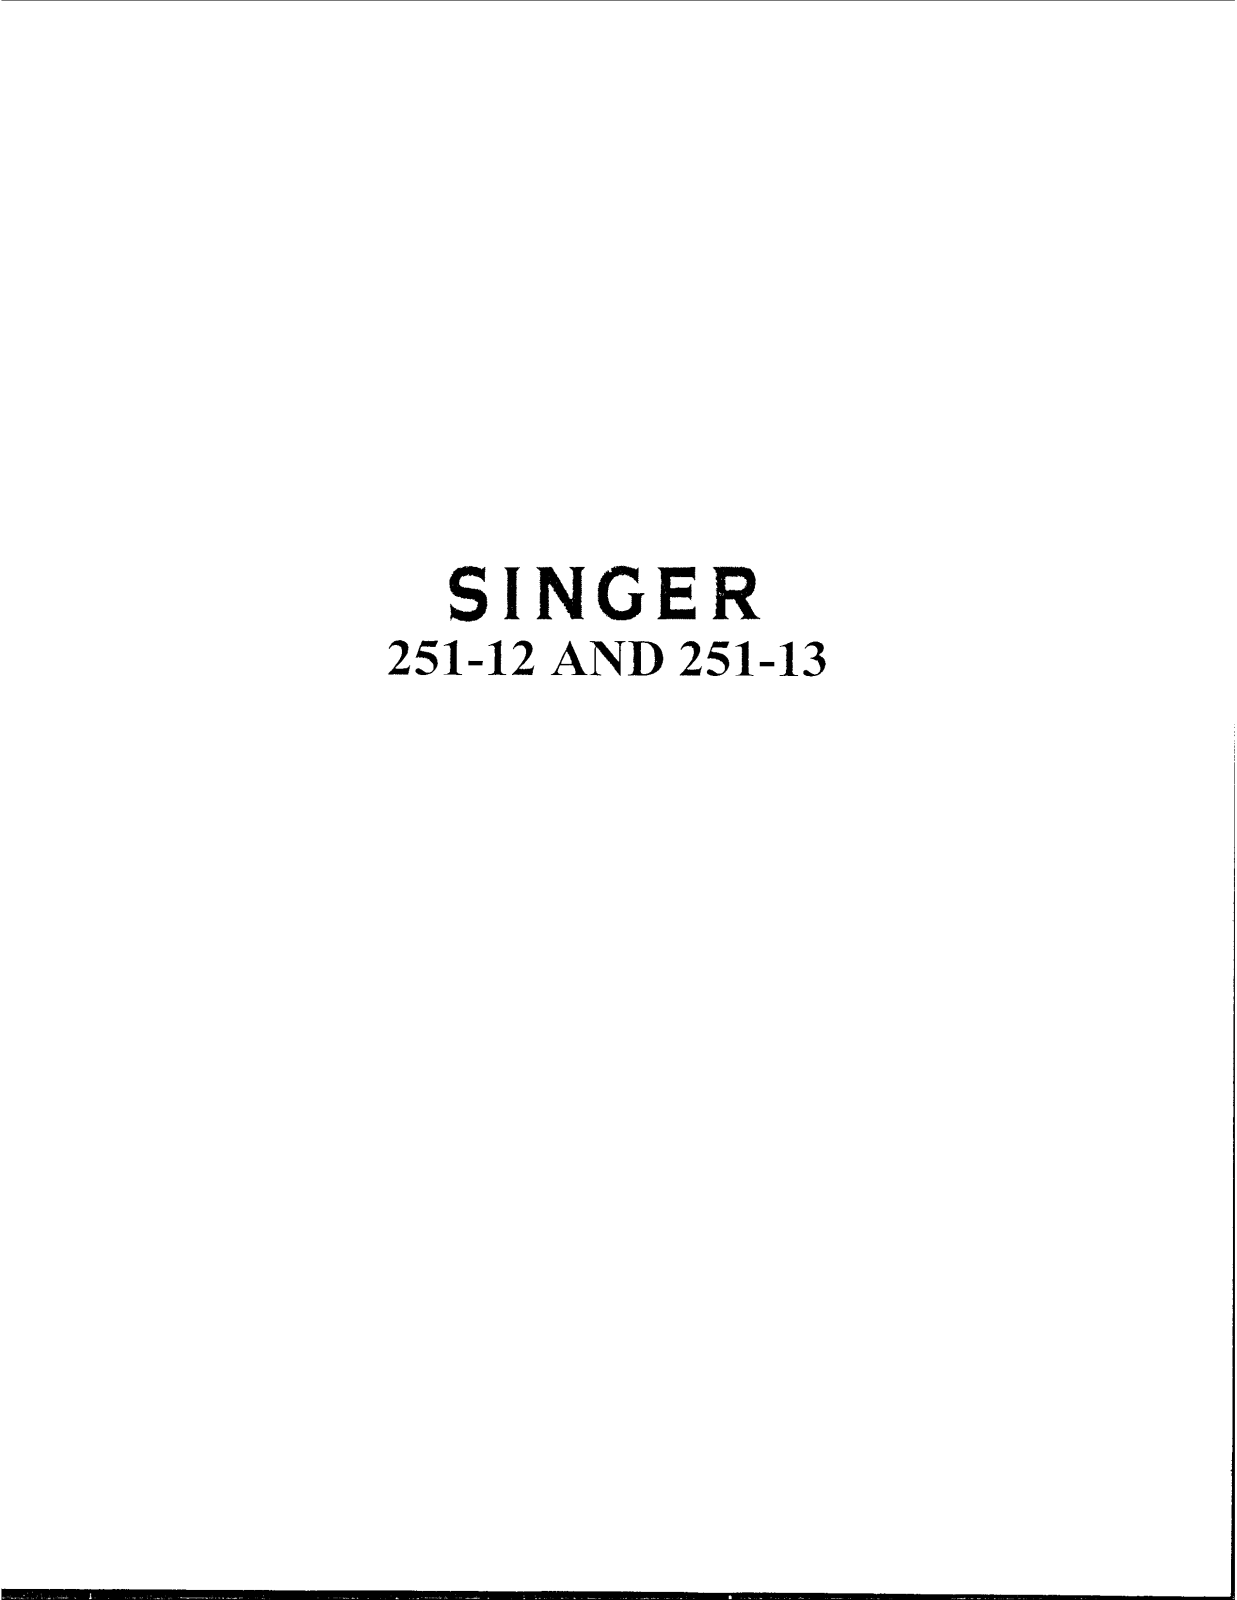 Singer 251-13 User Manual